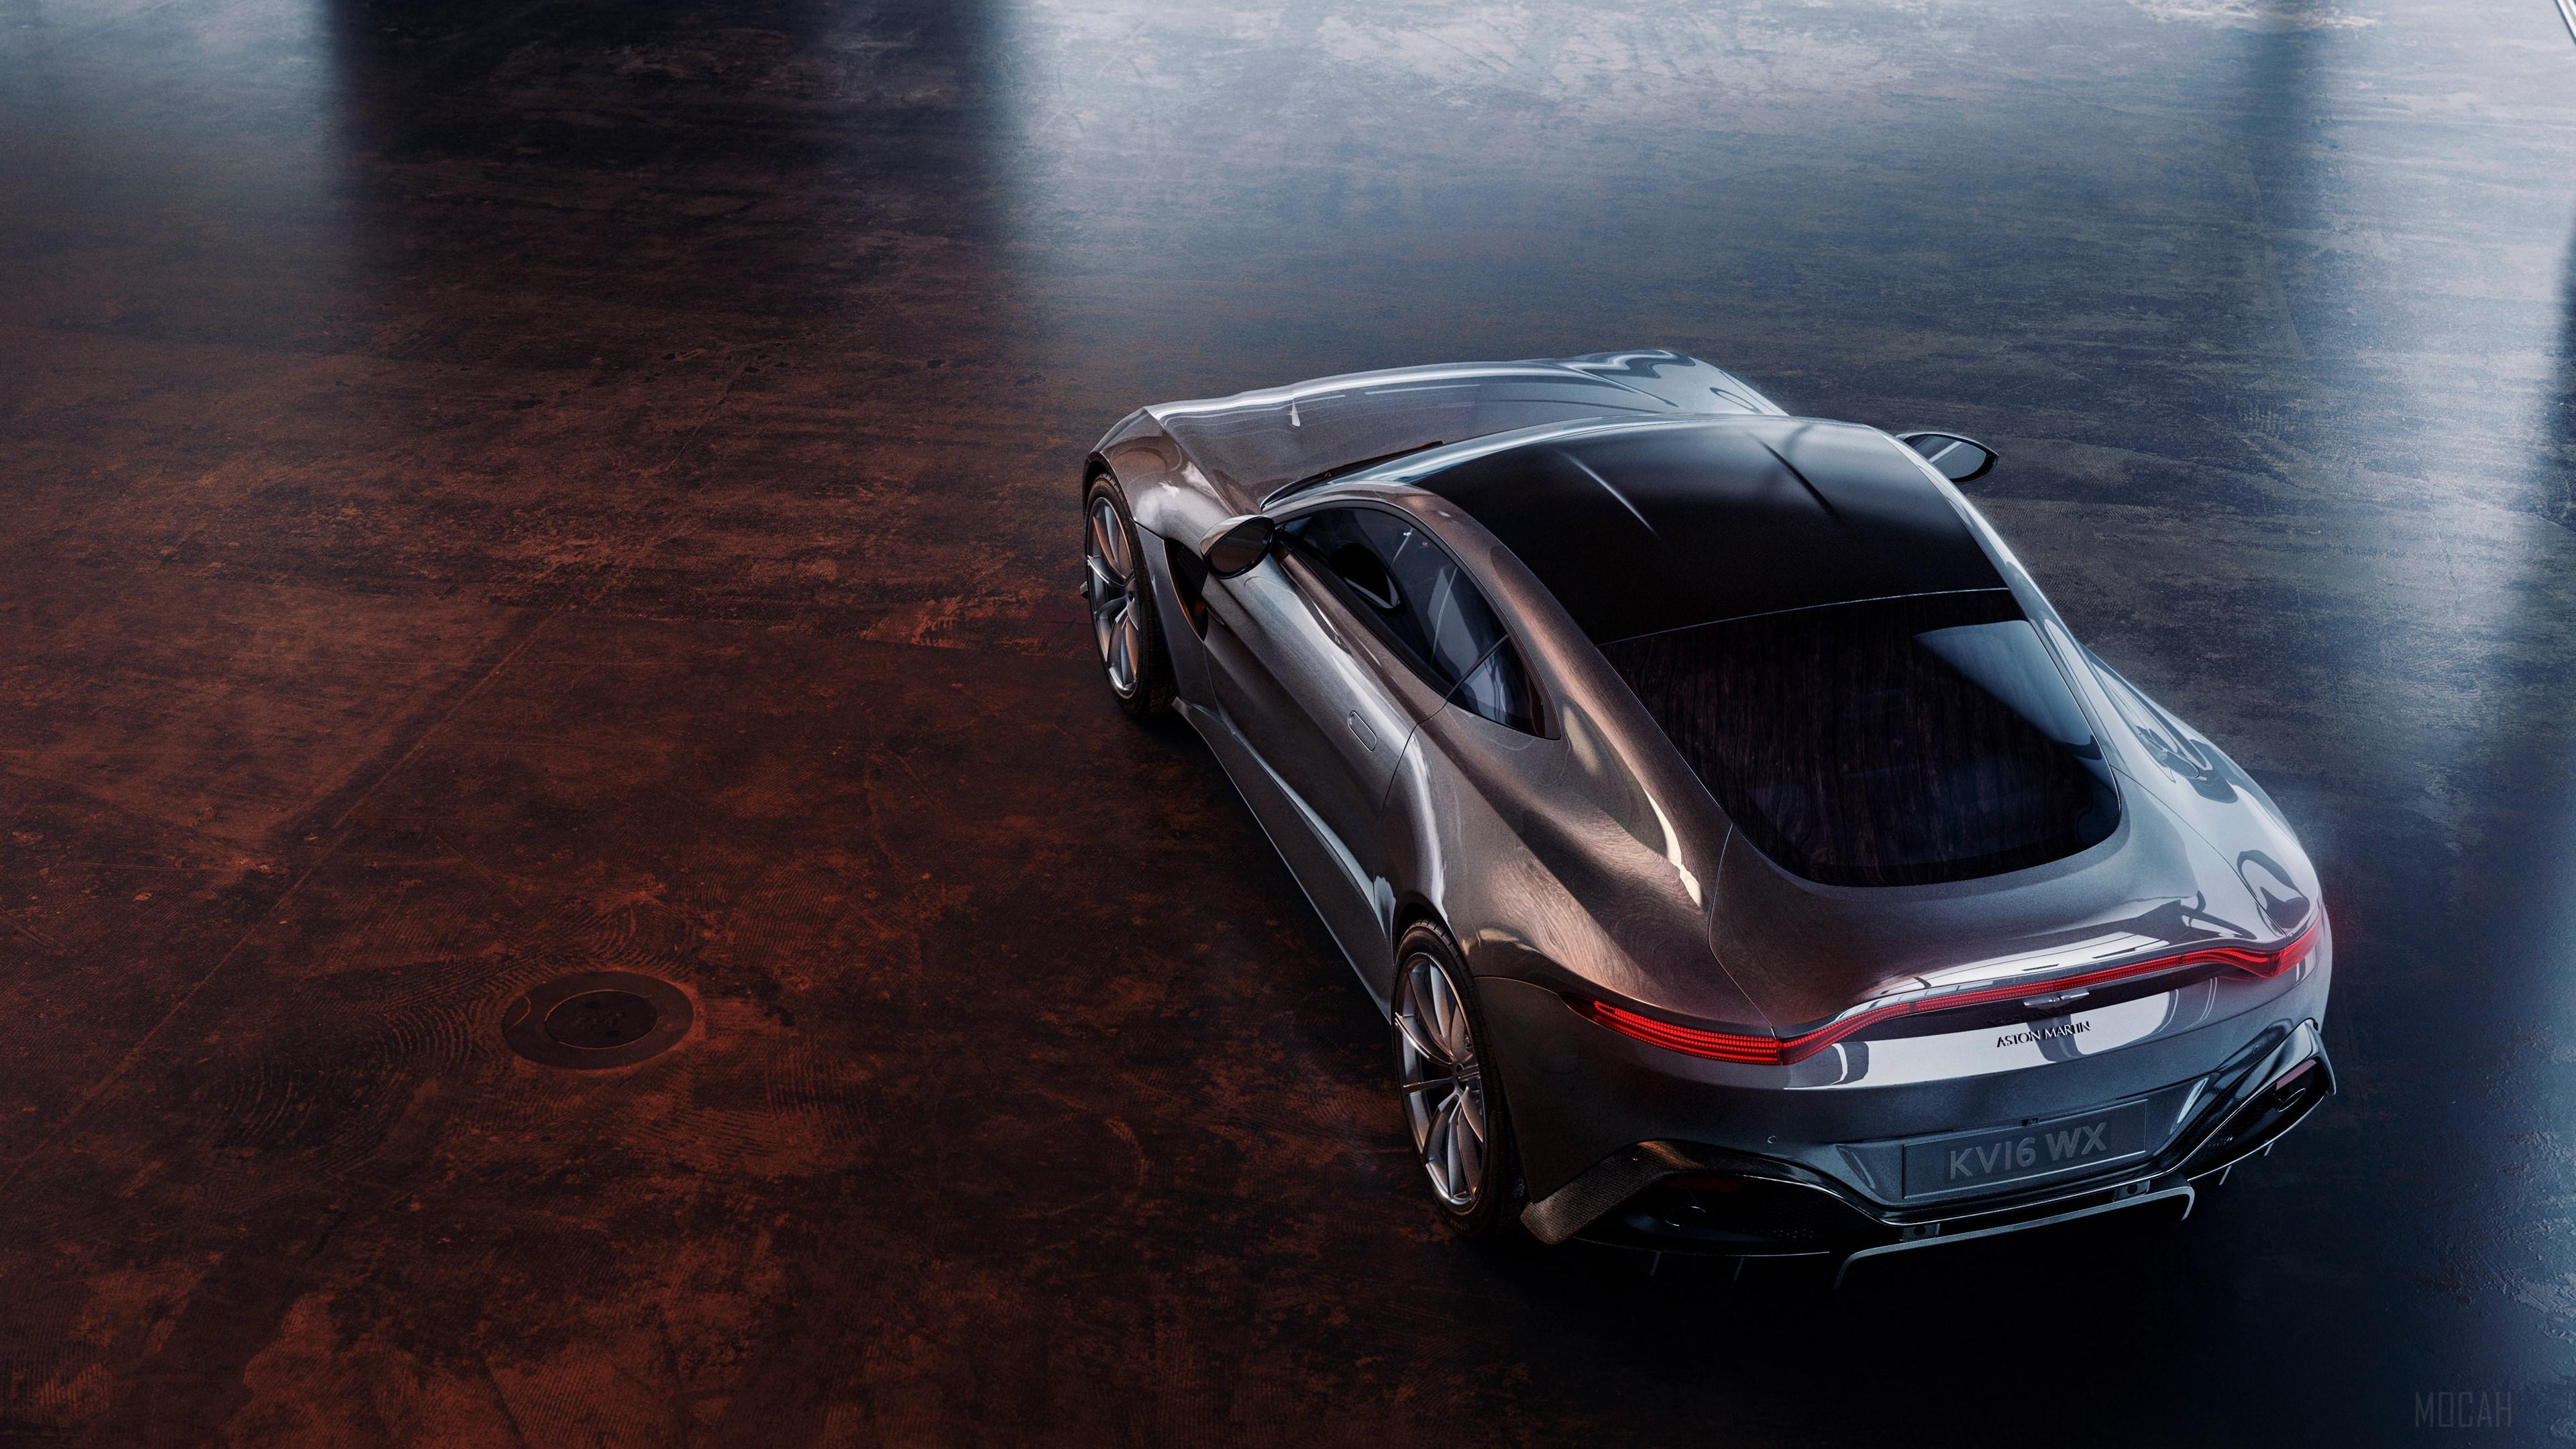 HD wallpaper, Aston Martin Vantage Upper View 4K